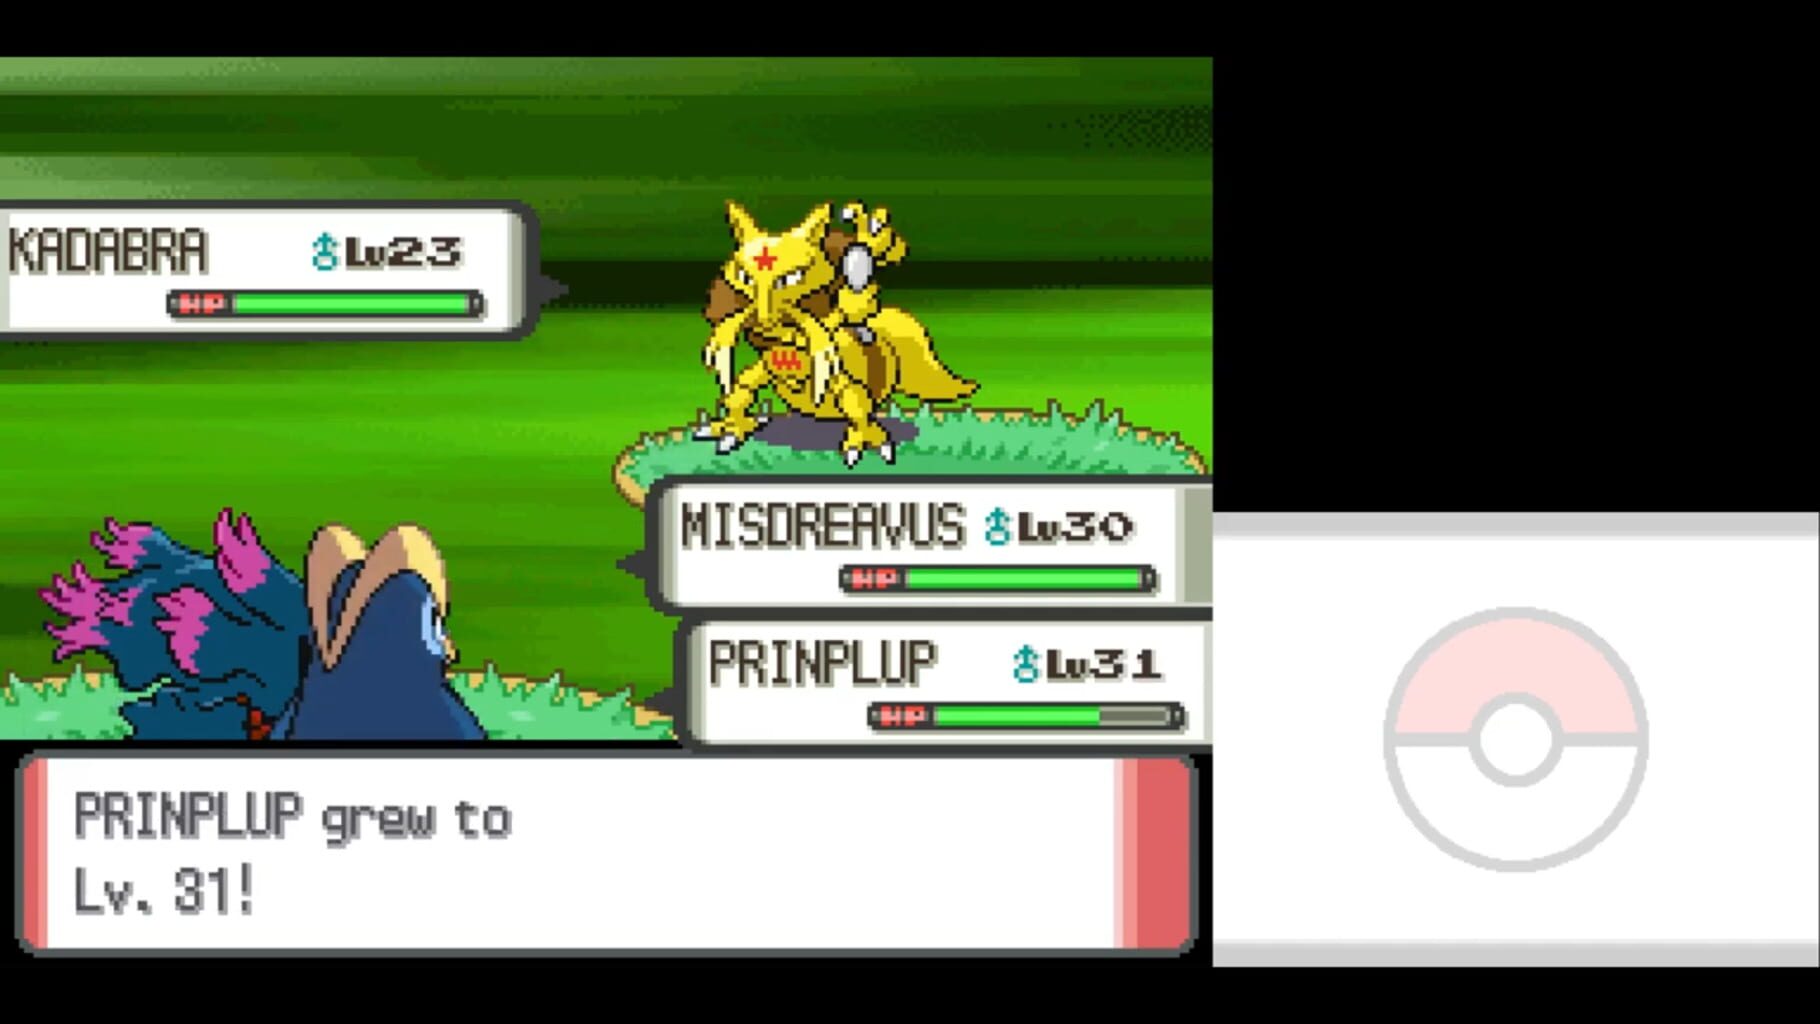 Captura de pantalla - Pokémon Pearl Version